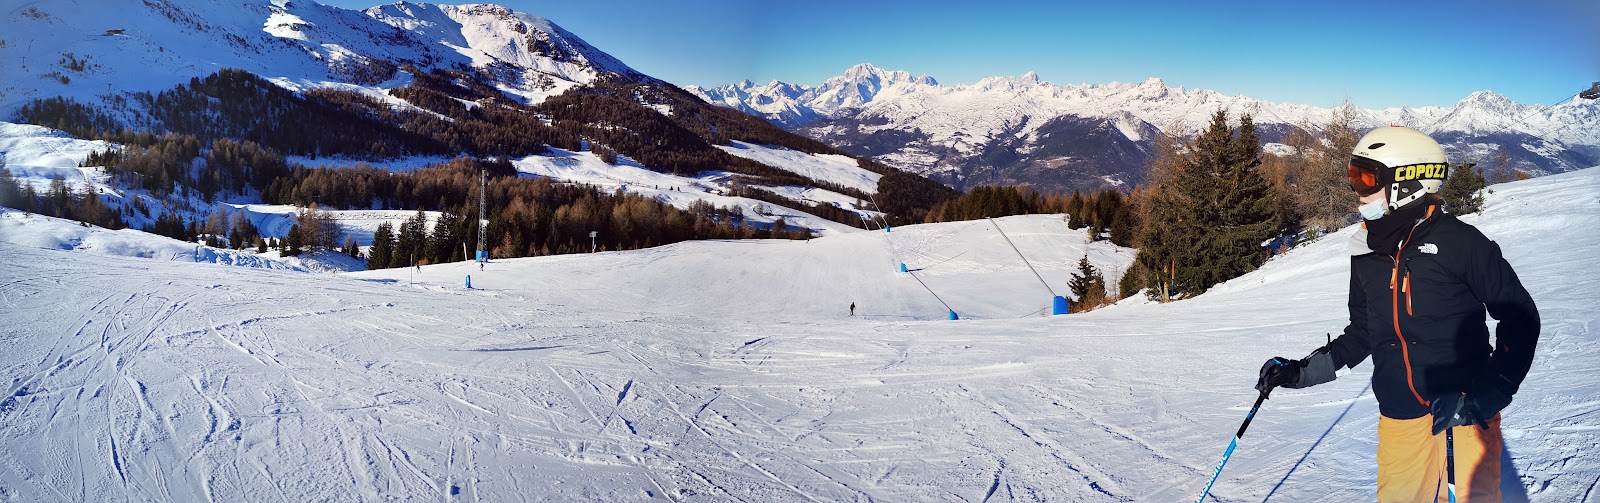 Pila Ski Resort Info Guide  Pila Valle d'Aosta Italy Review